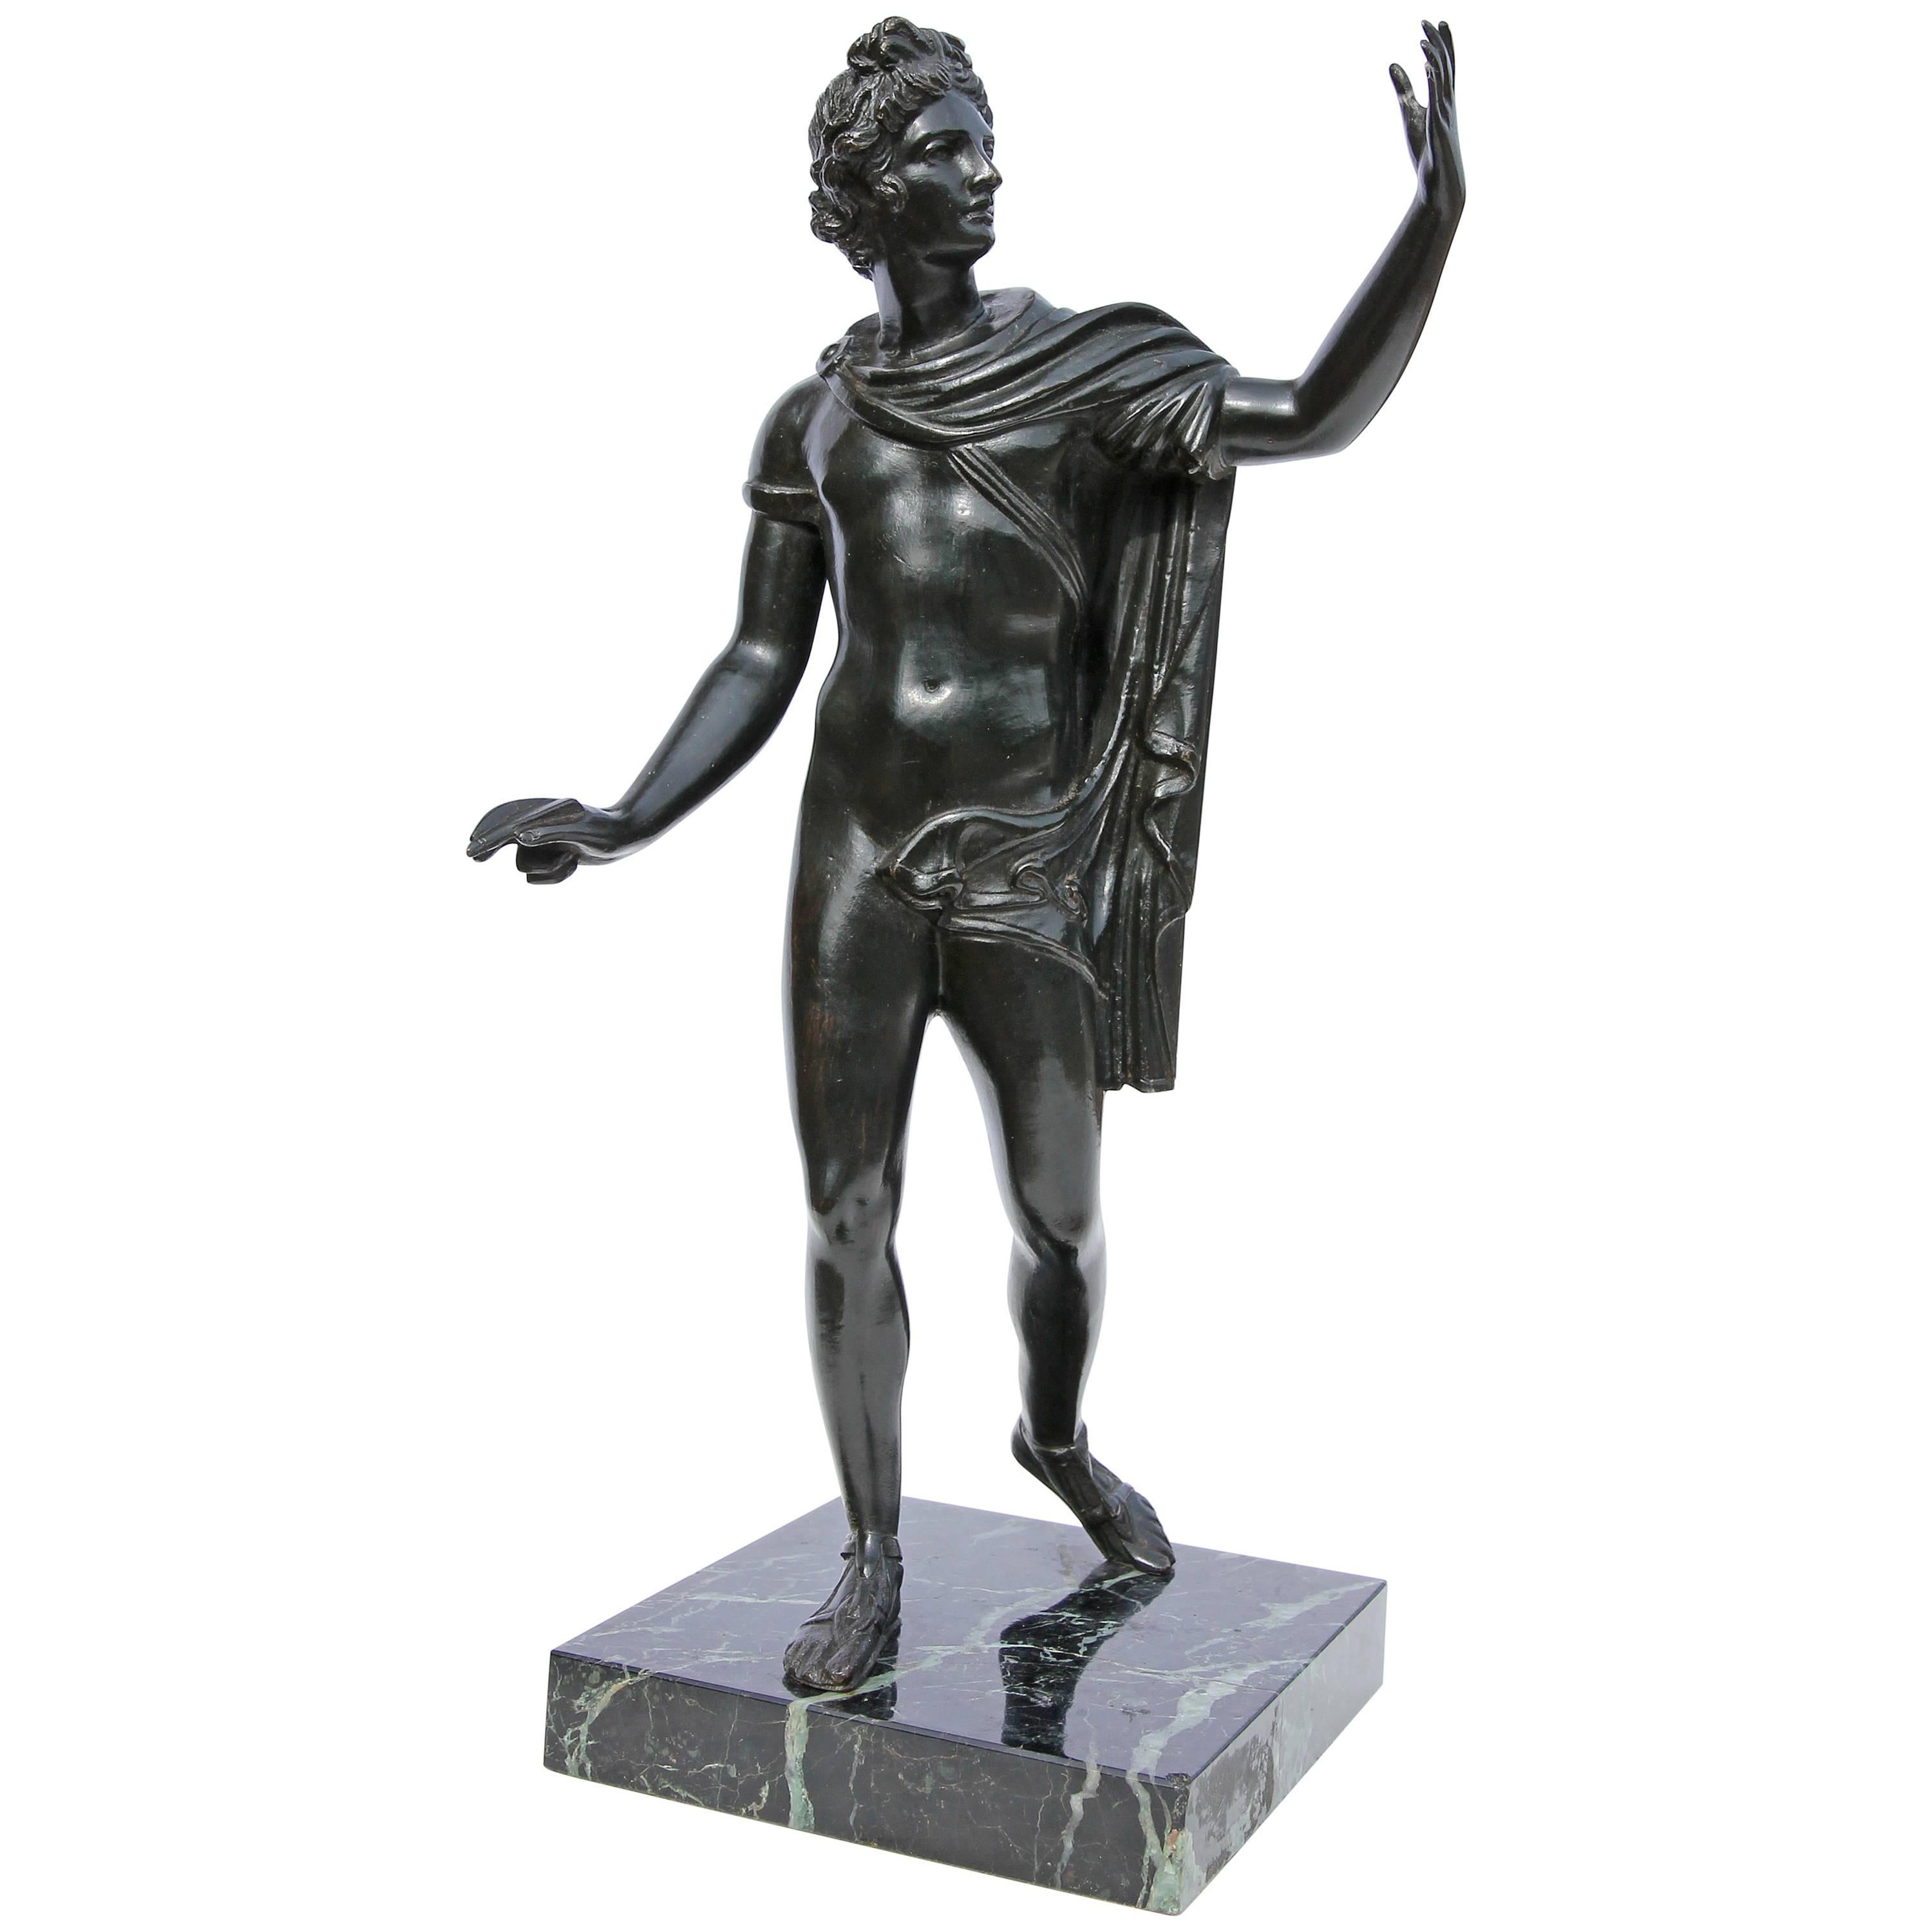 Grand Tour Bronze Sculpture of Classical Roman Man "The Poet"